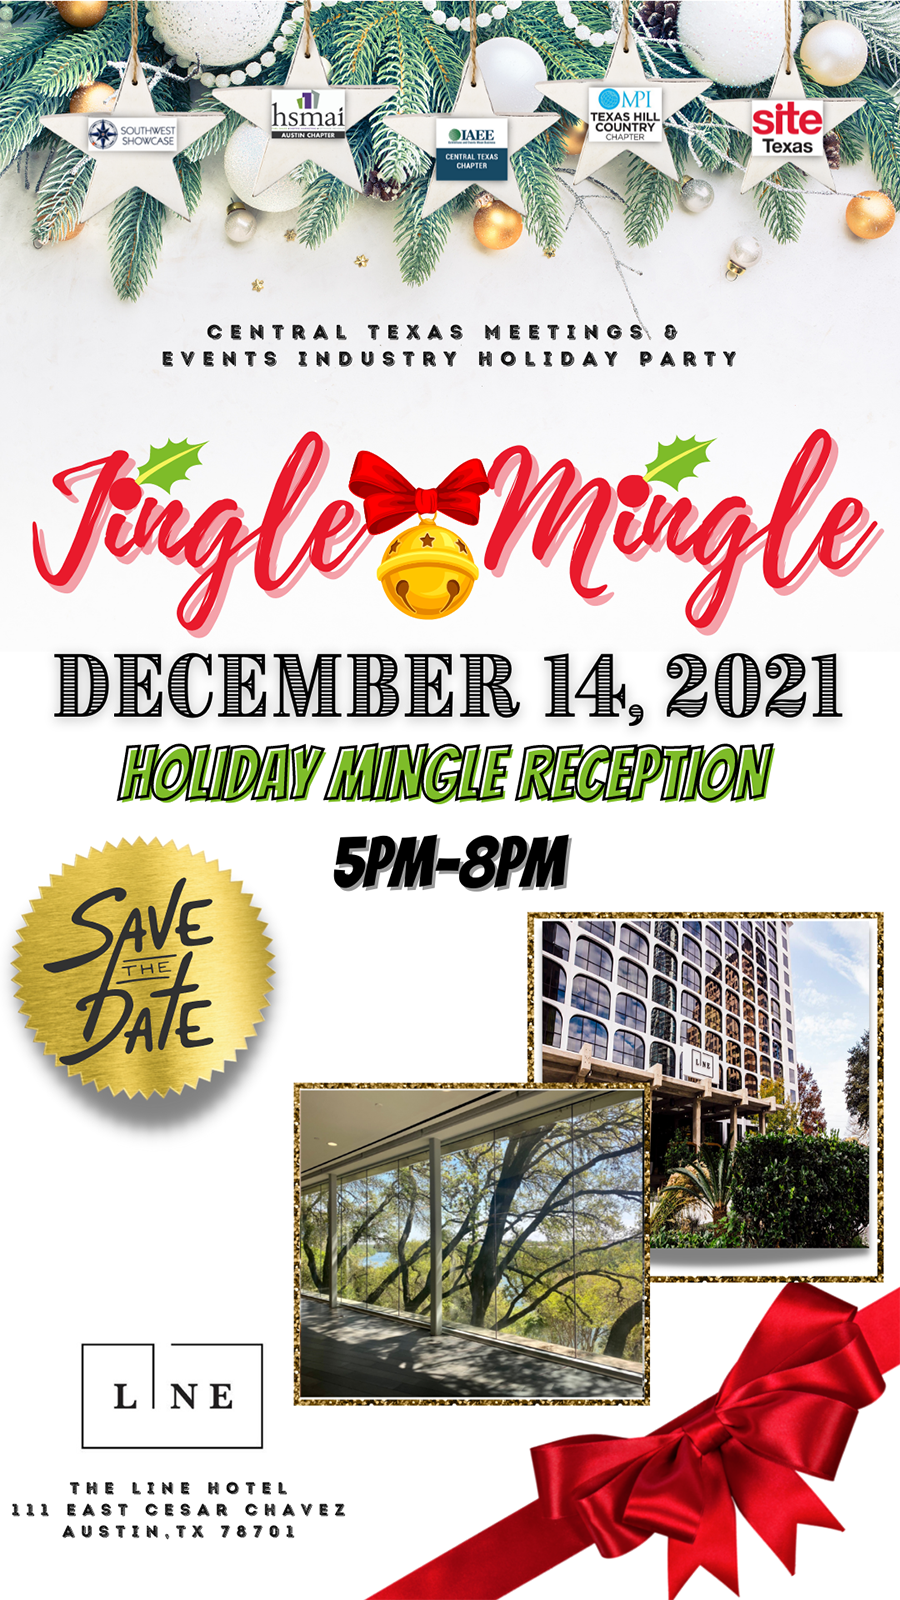 Jingle-n-Mingle Holiday Reception